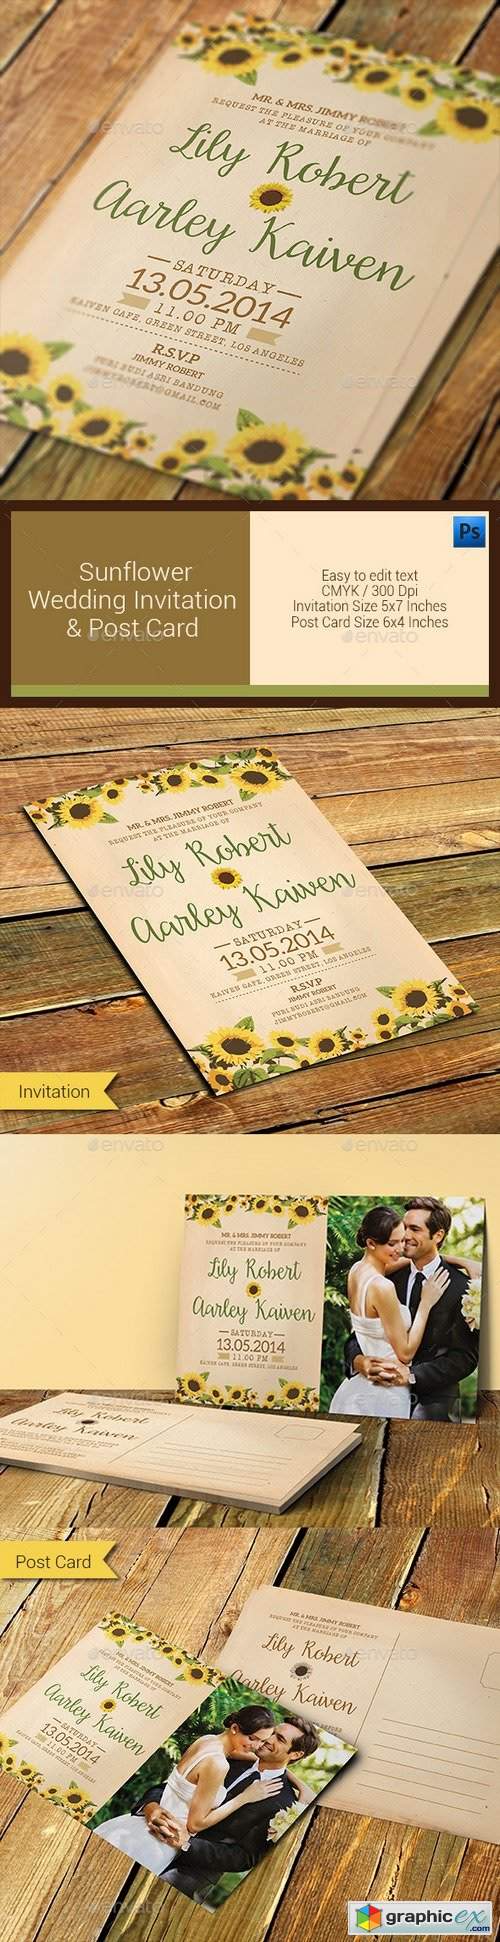 Sunflower Wedding Invitation & Post Card